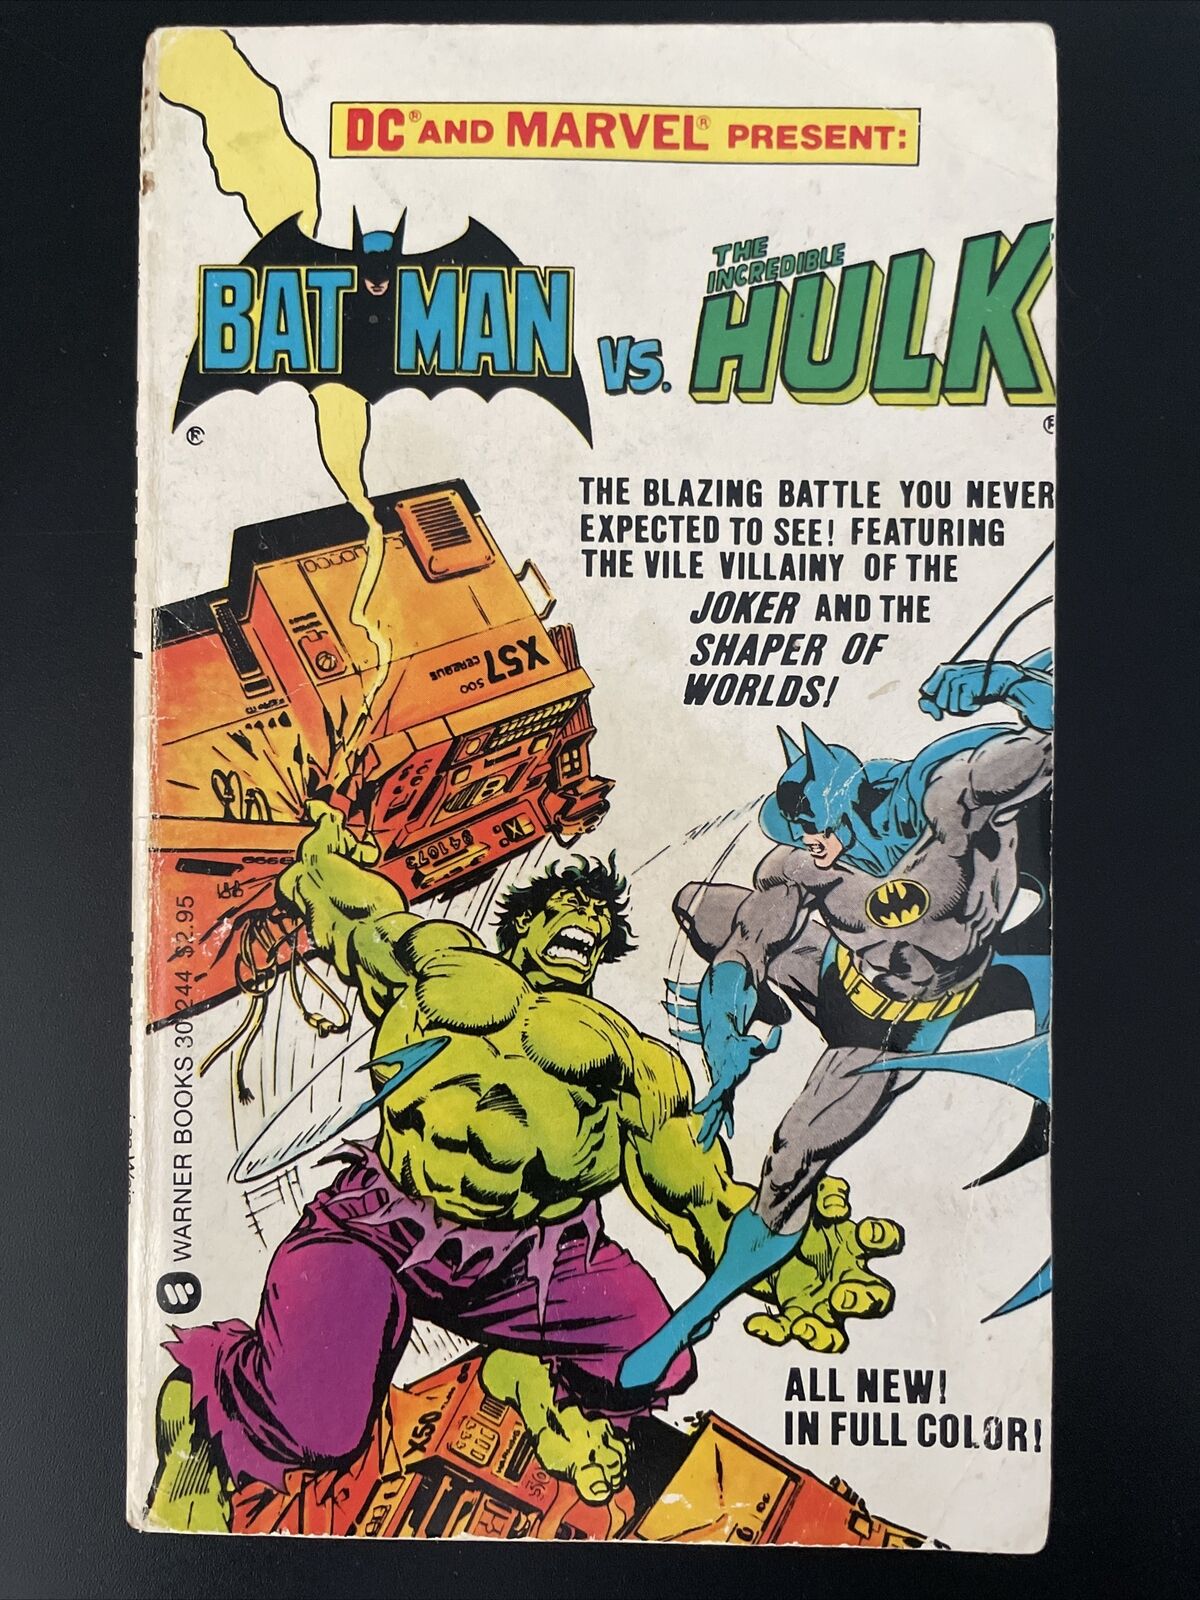 DC and Marvel Present: Batman vs The Incredible Hulk (Warner Books, 1982)